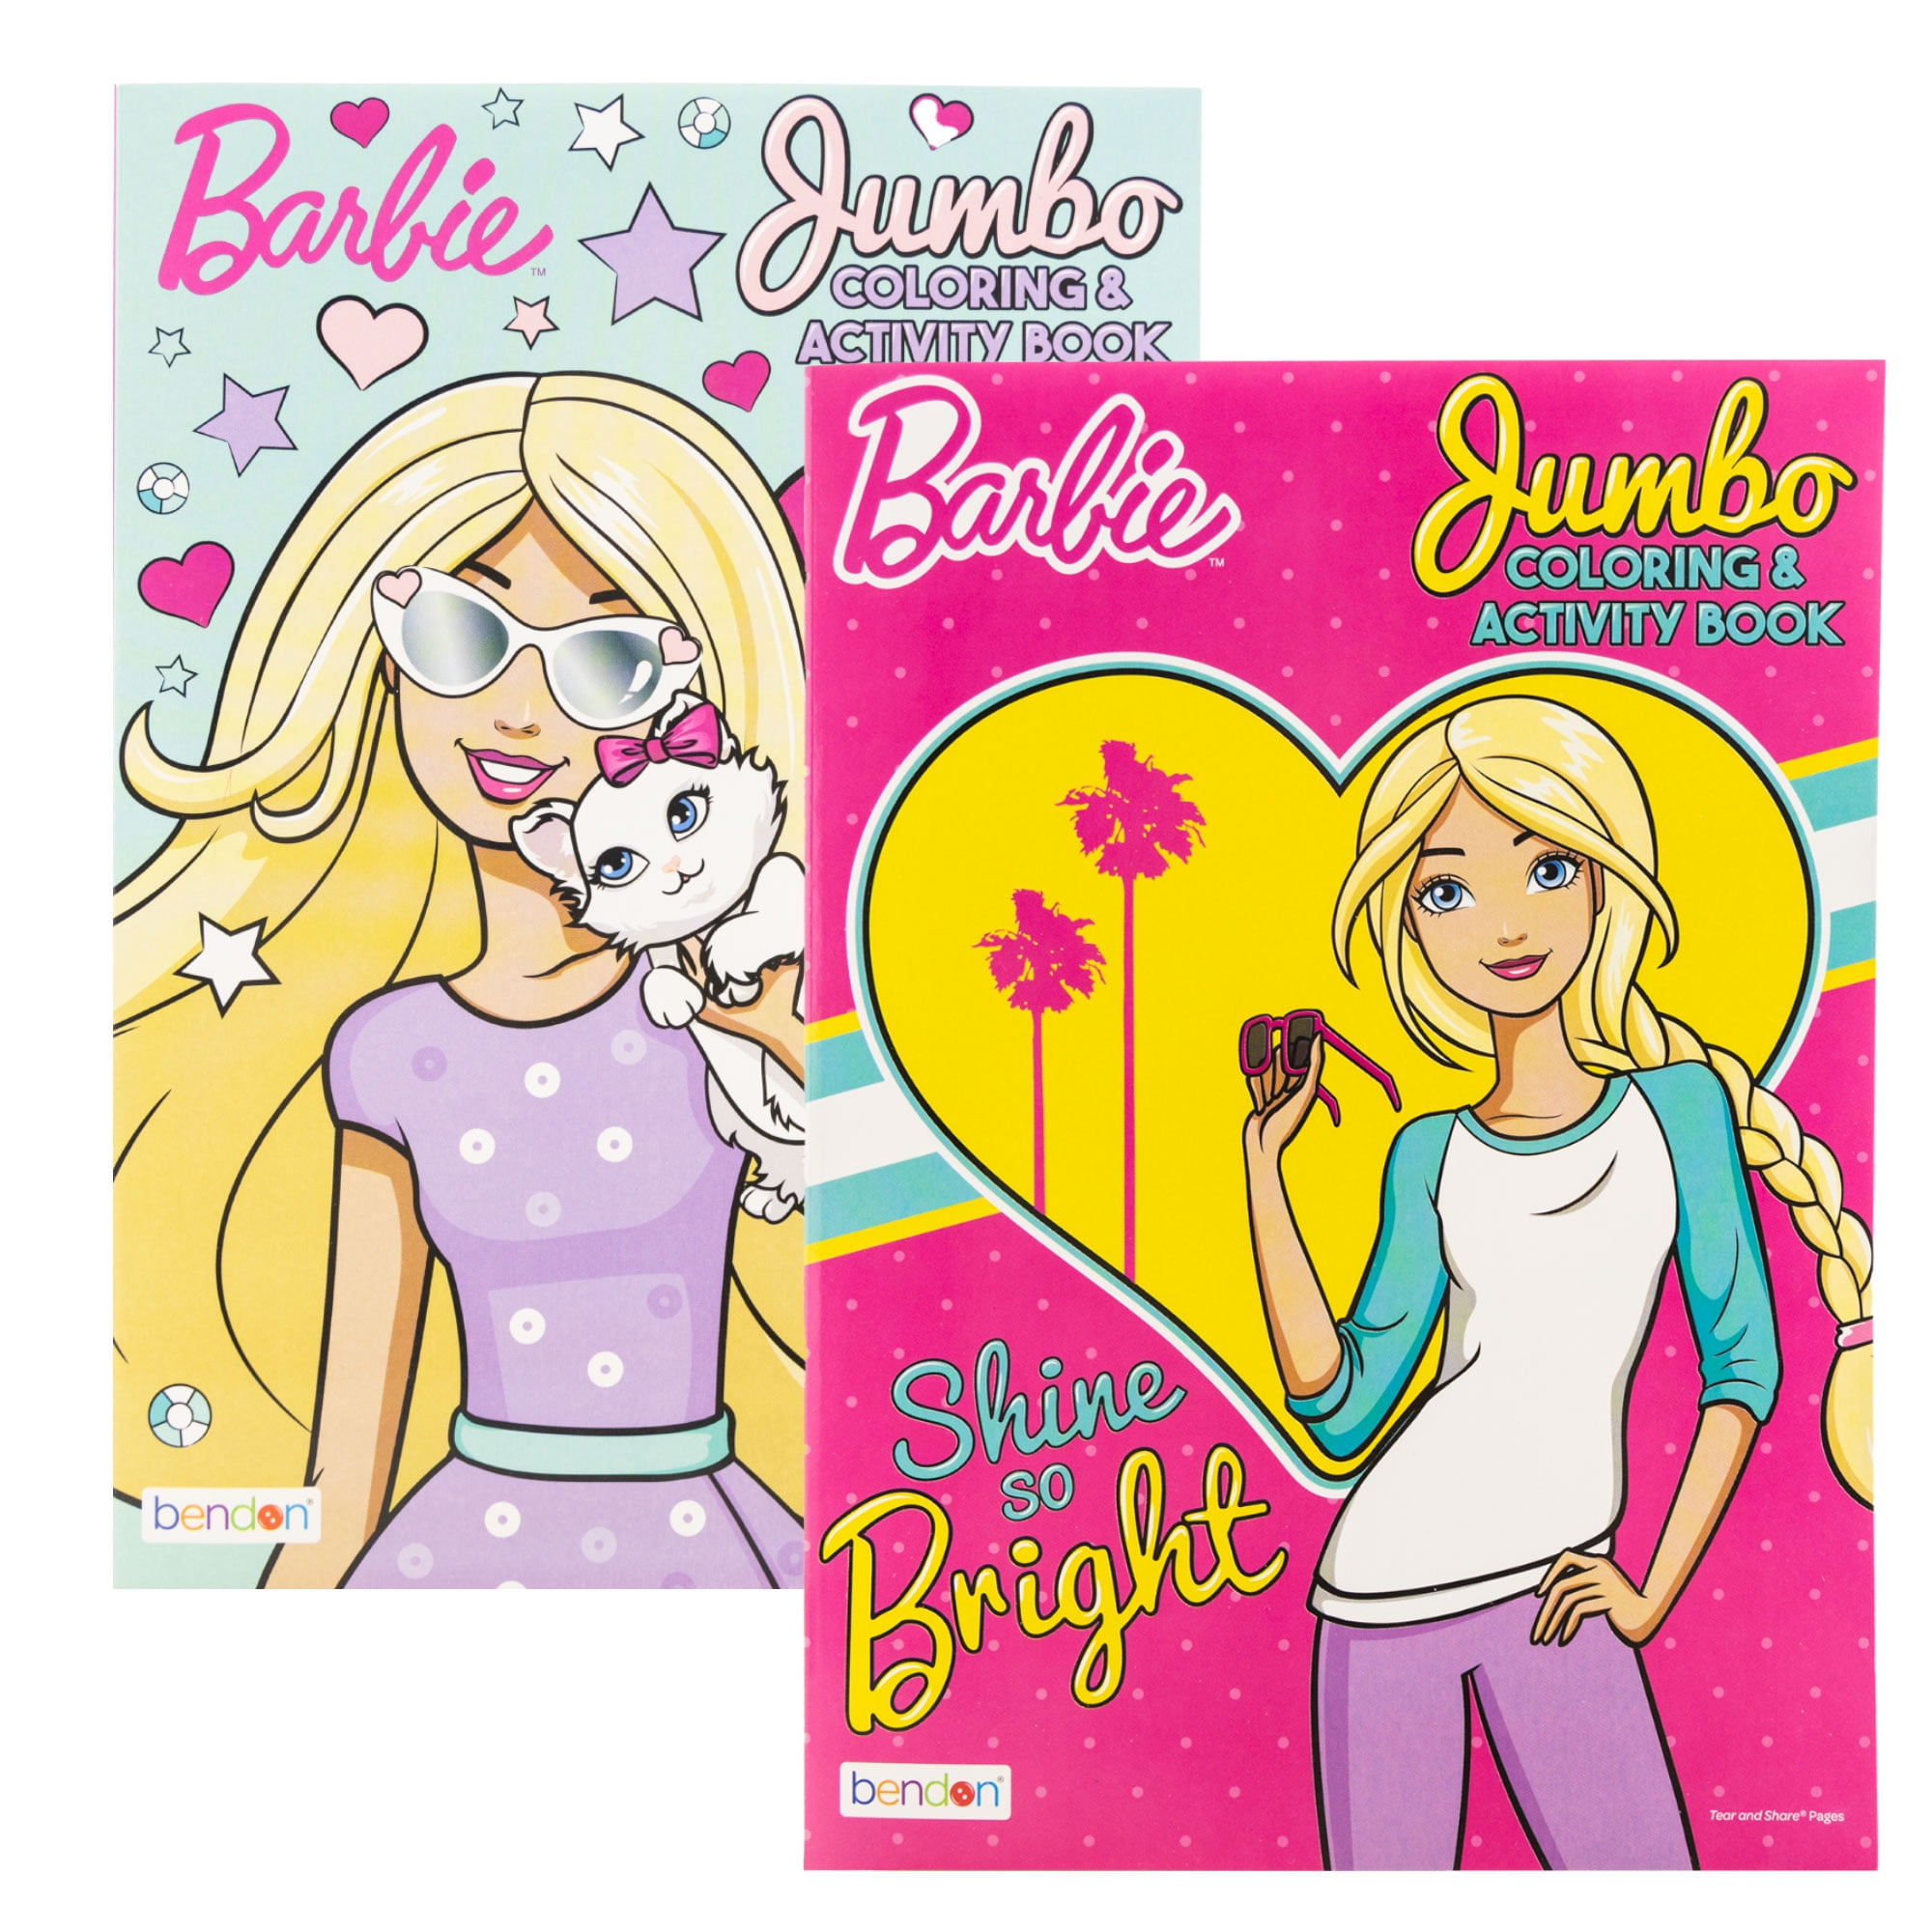 Girl Barbie Coloring Books Activity Bundle - 2 Pack Barbie Imagine Ink Coloring Book with Barbie Mini Coloring Book and Barbie Stickers (Barbie